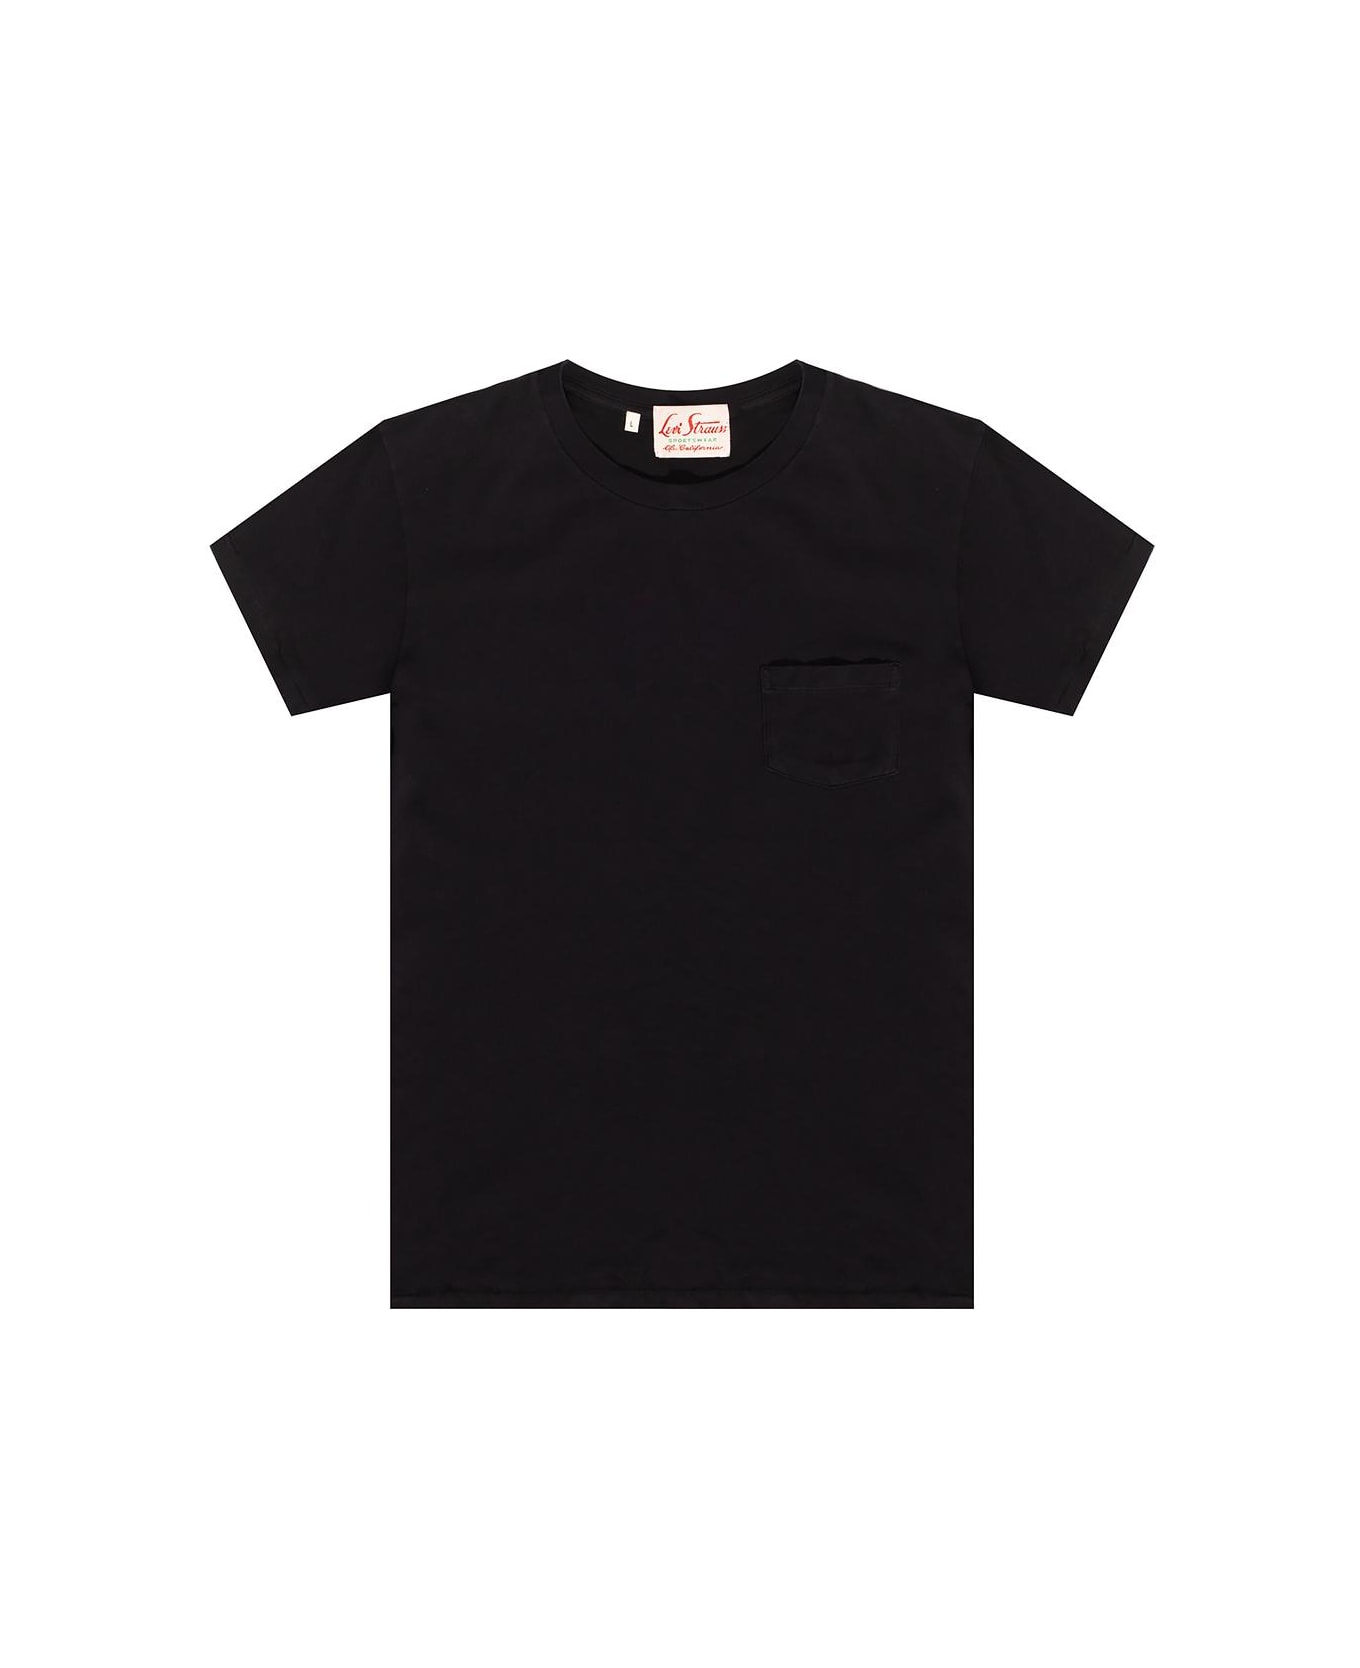 Levi's T-shirt 'vintage Clothing' Collection - Black